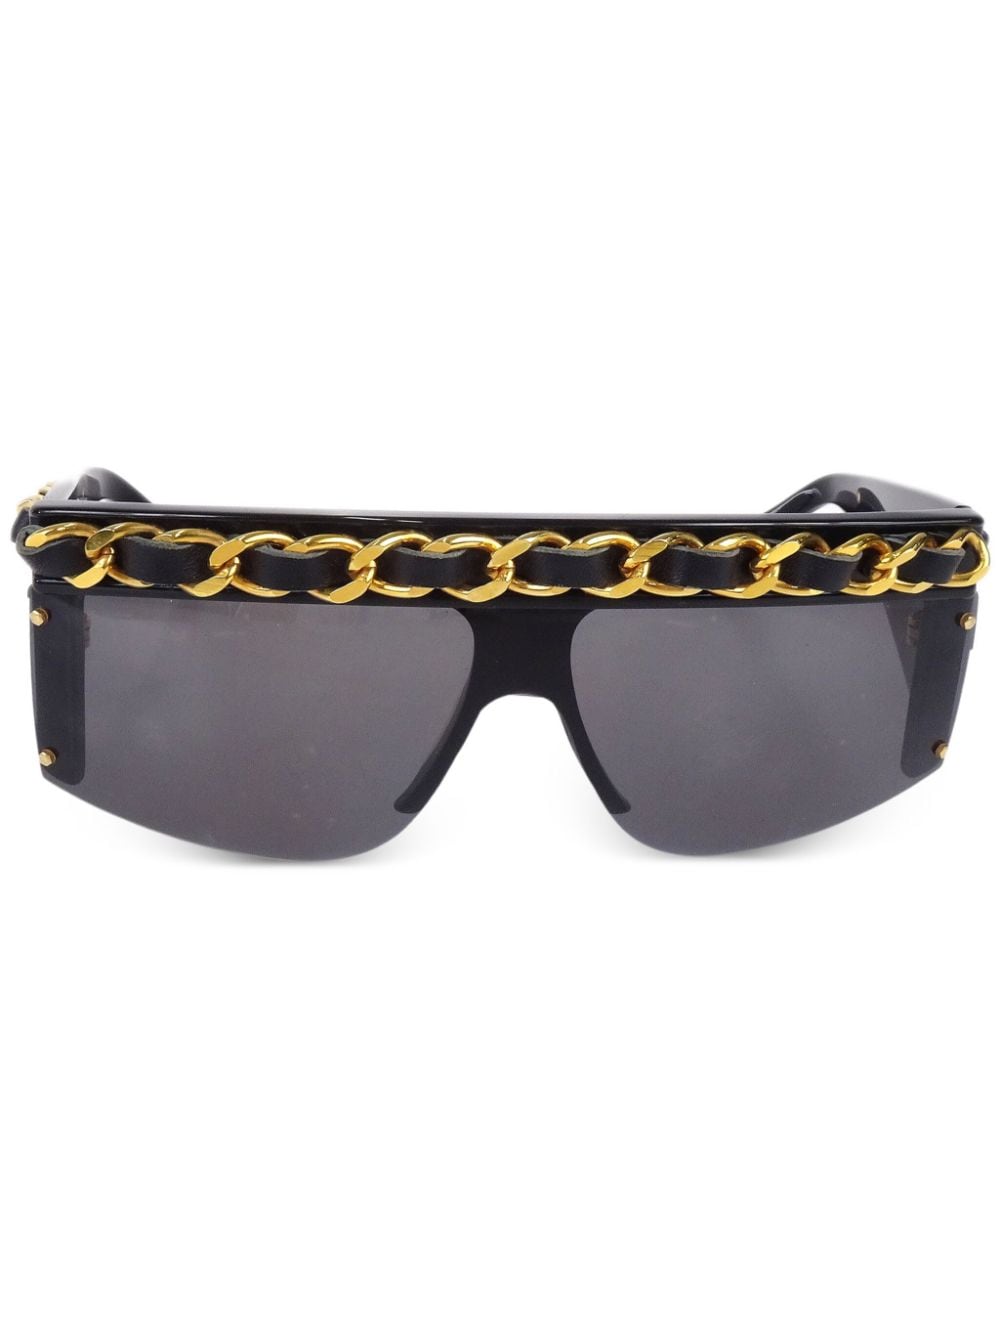 CHANEL Pre-Owned 1980s-1990s chain shield sunglasses - Black